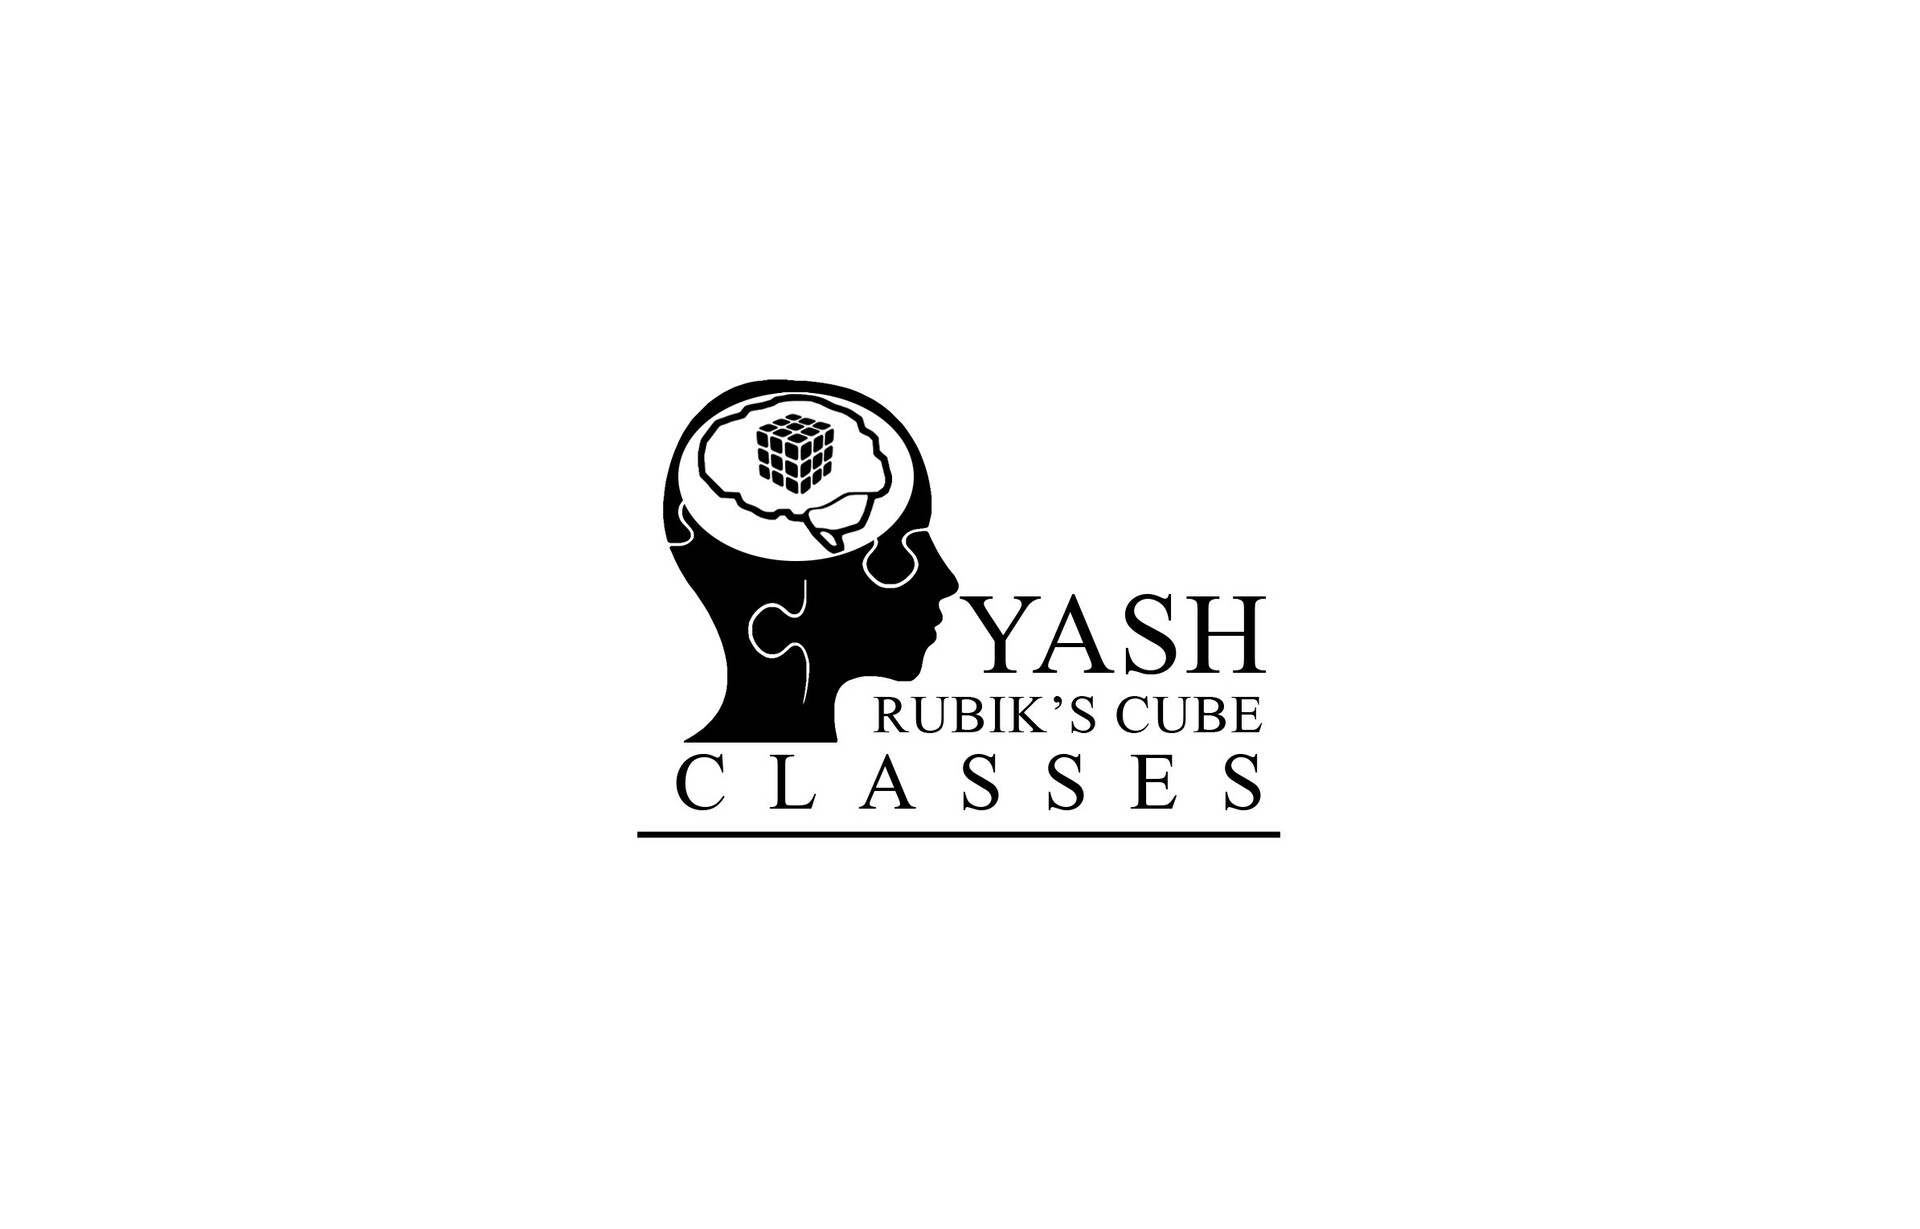 yash creation - Student - MAAC | LinkedIn